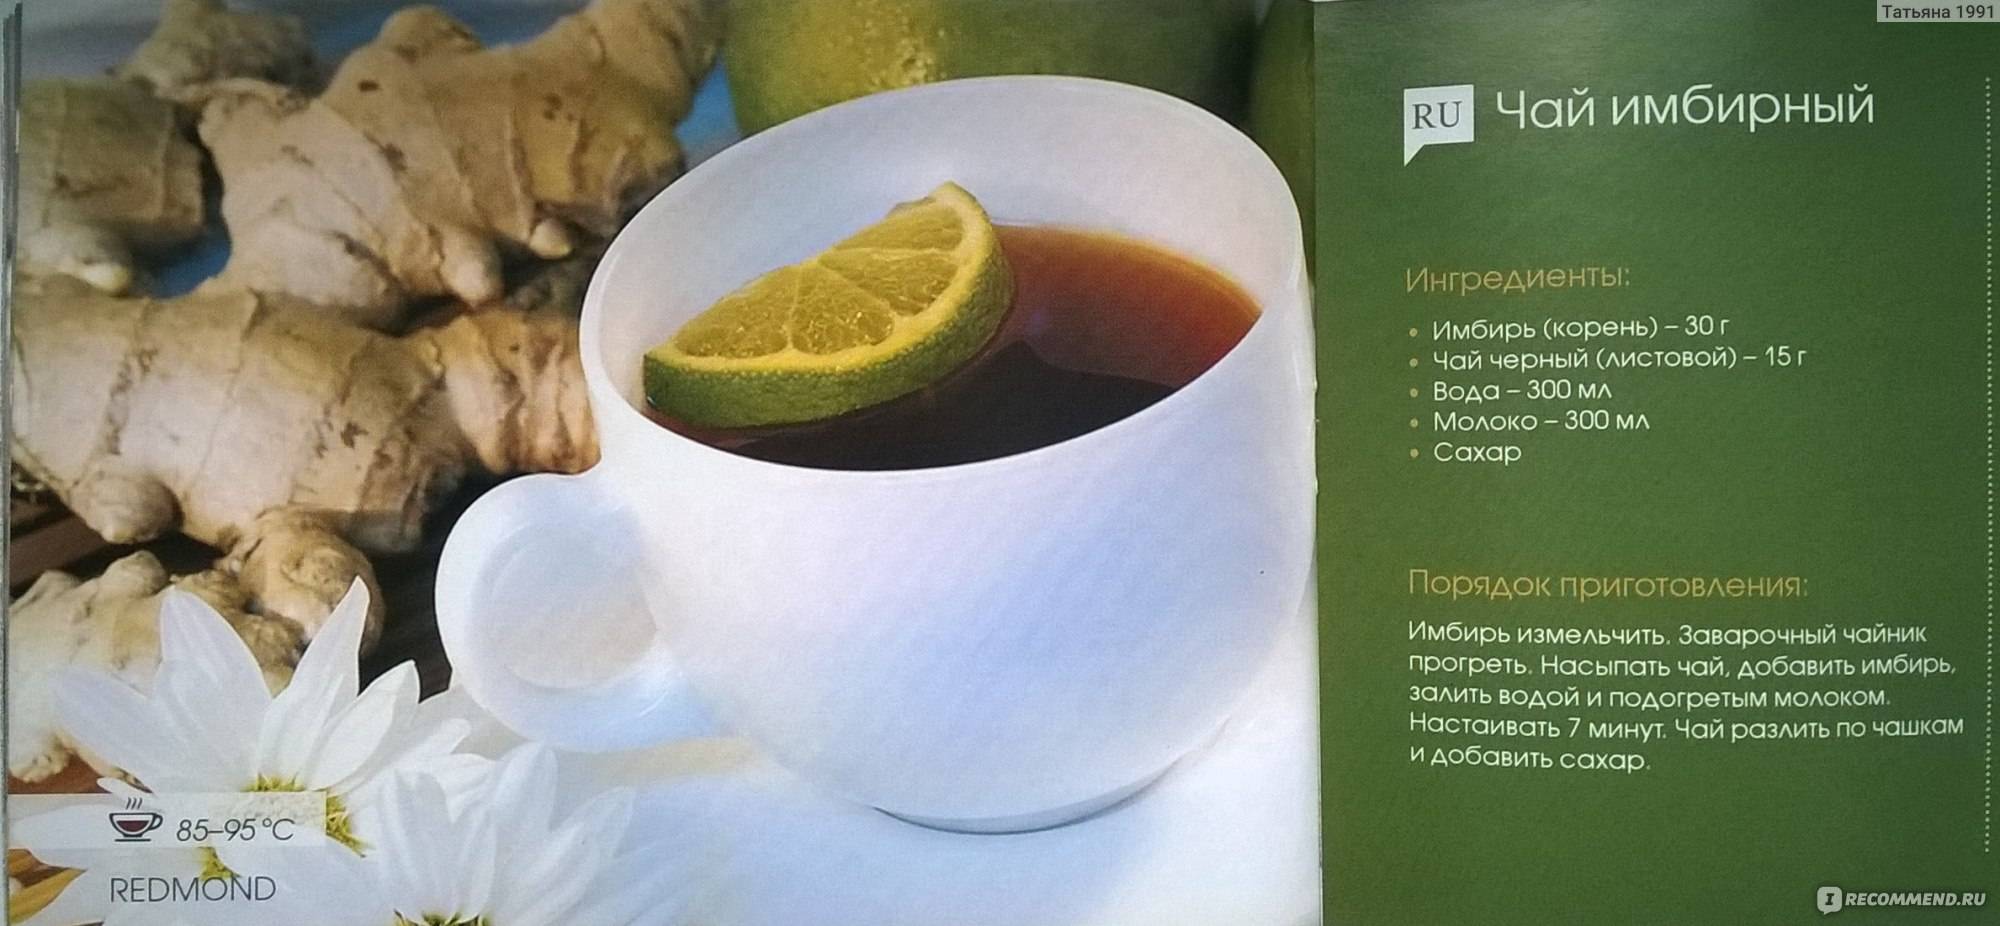 Имбирь при простуде, рецепты чая